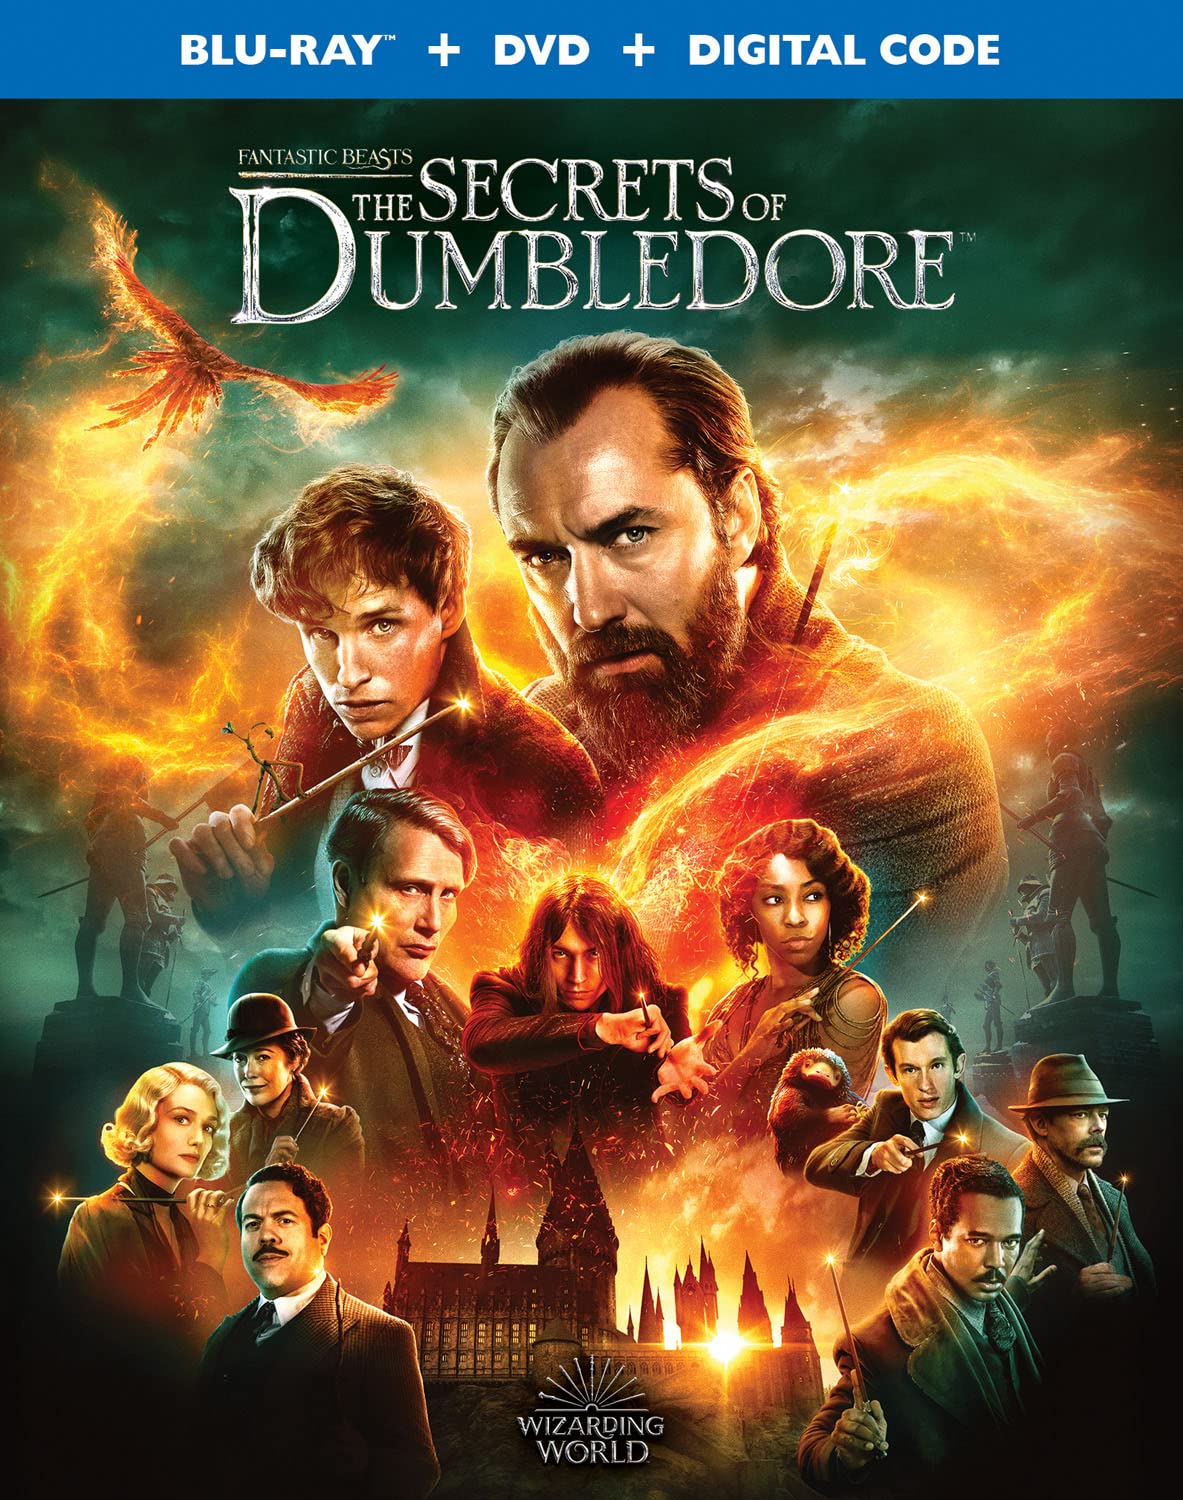 Fantastic Beasts: The Secrets of Dumbledore DVD Release Date June 28, 2022